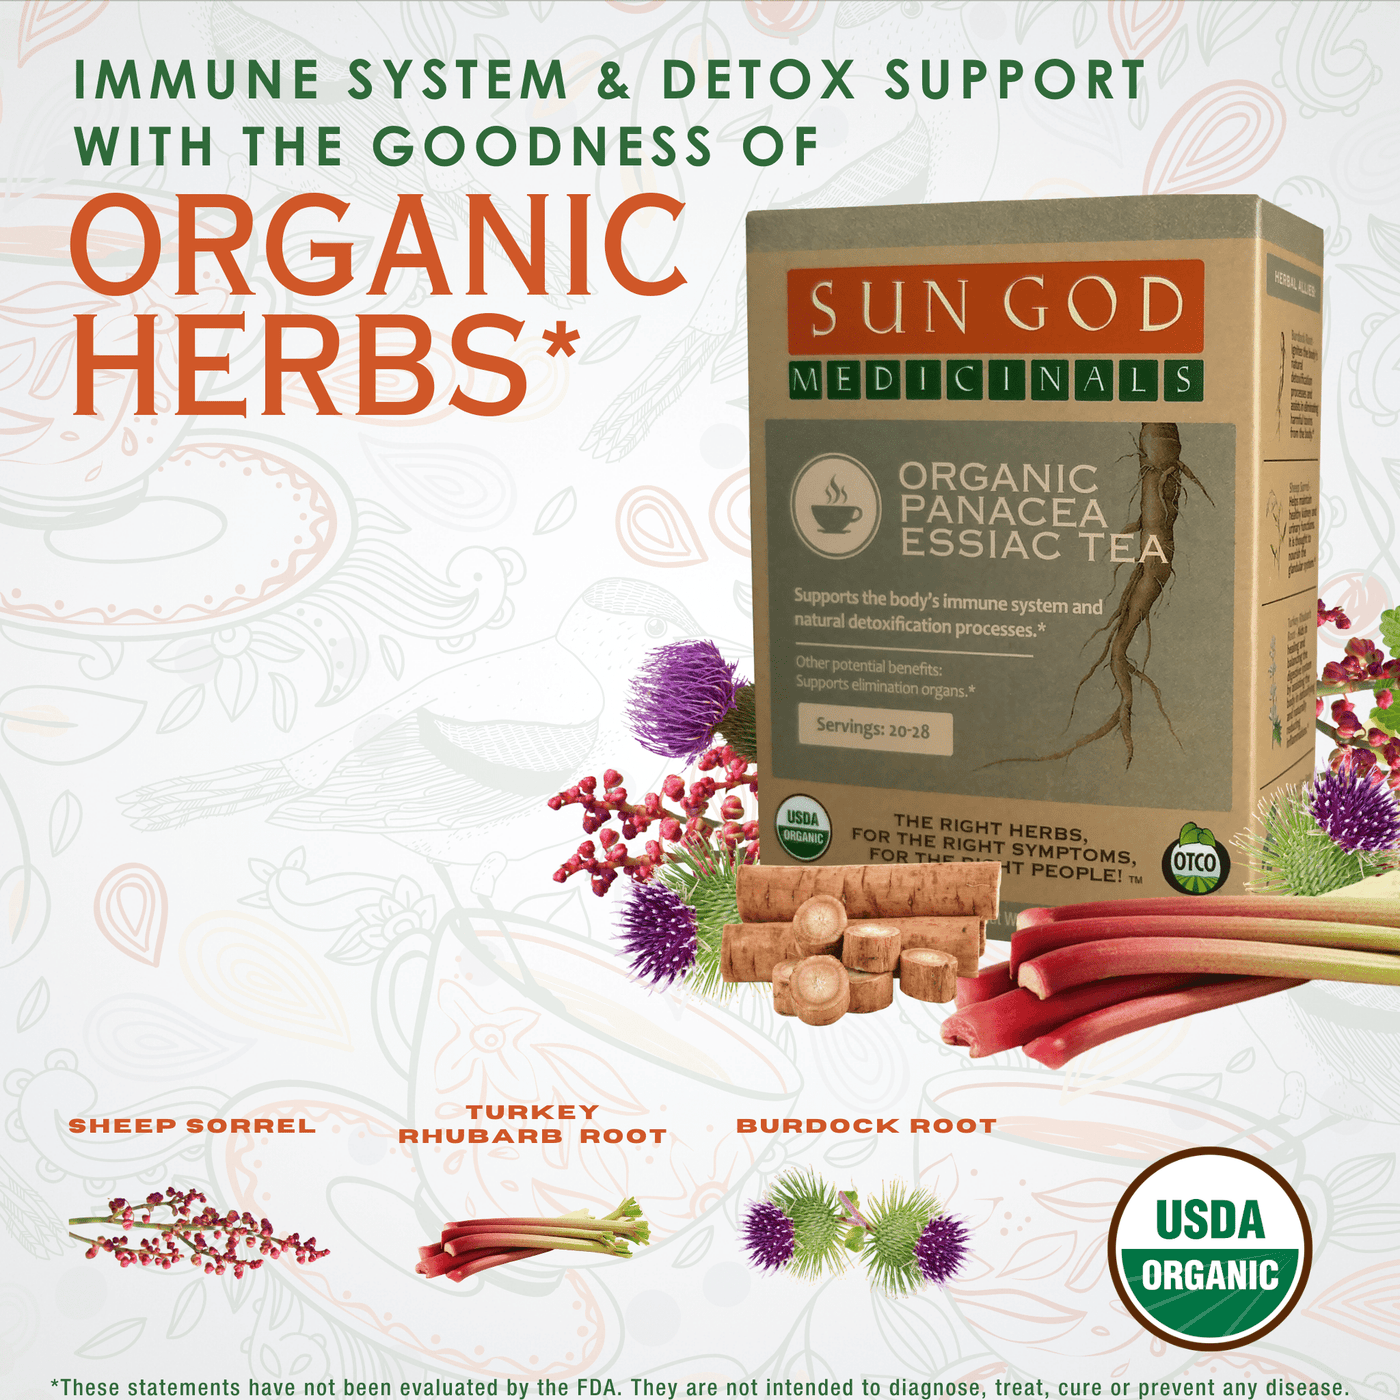 Panacea Essiac Organic Herbal Tea - Sun God Medicinals